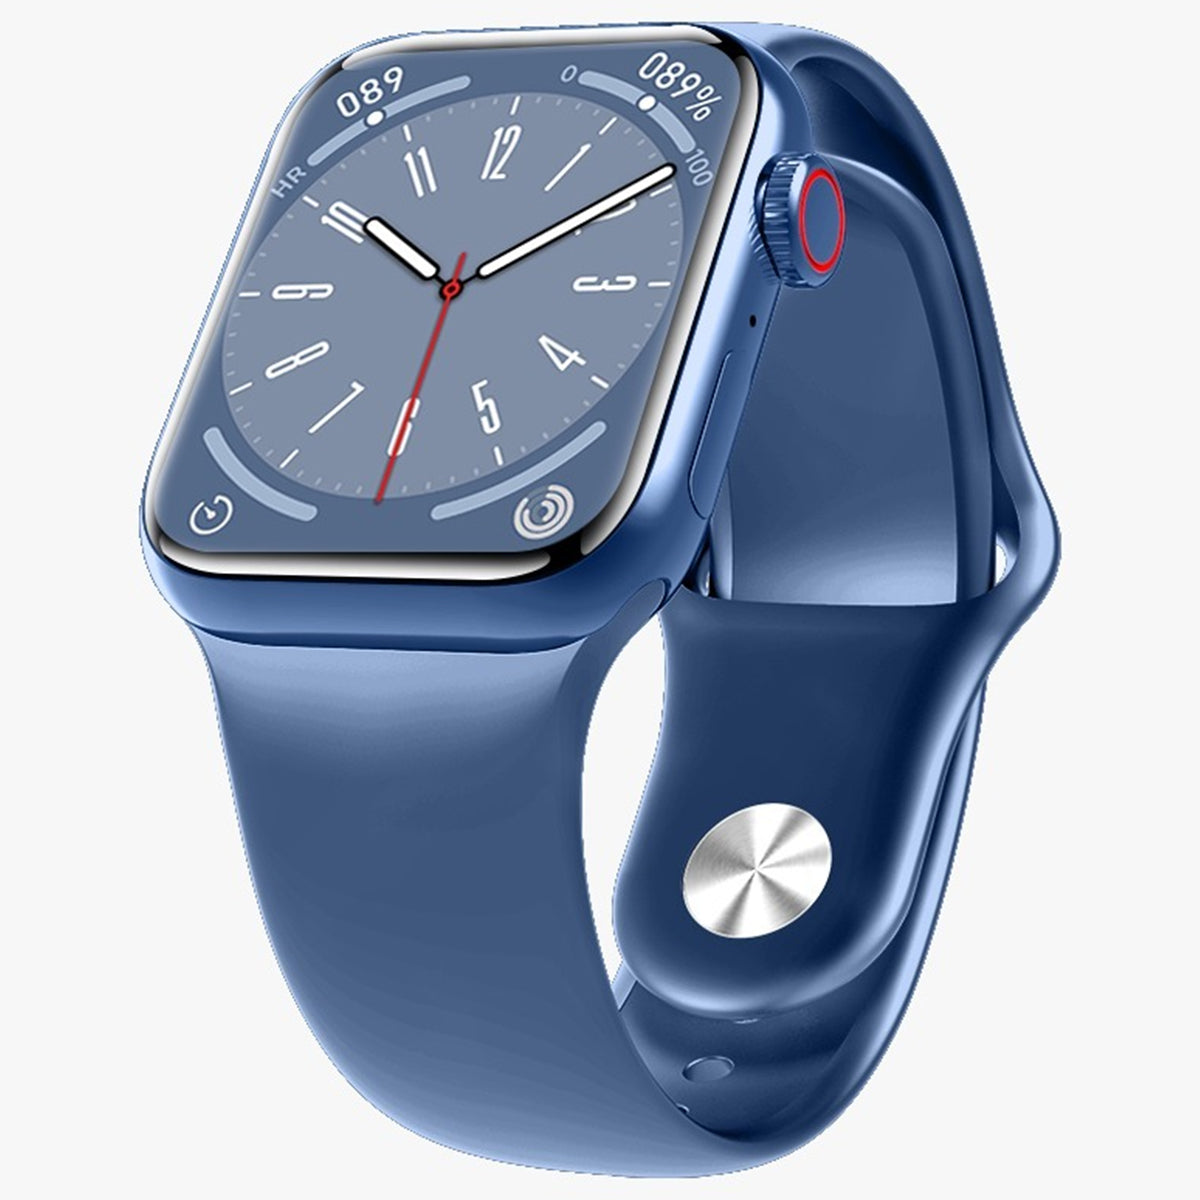 Fralugio Smart Watch Reloj Inteiigente Gs8 Mini Notificacion Hd